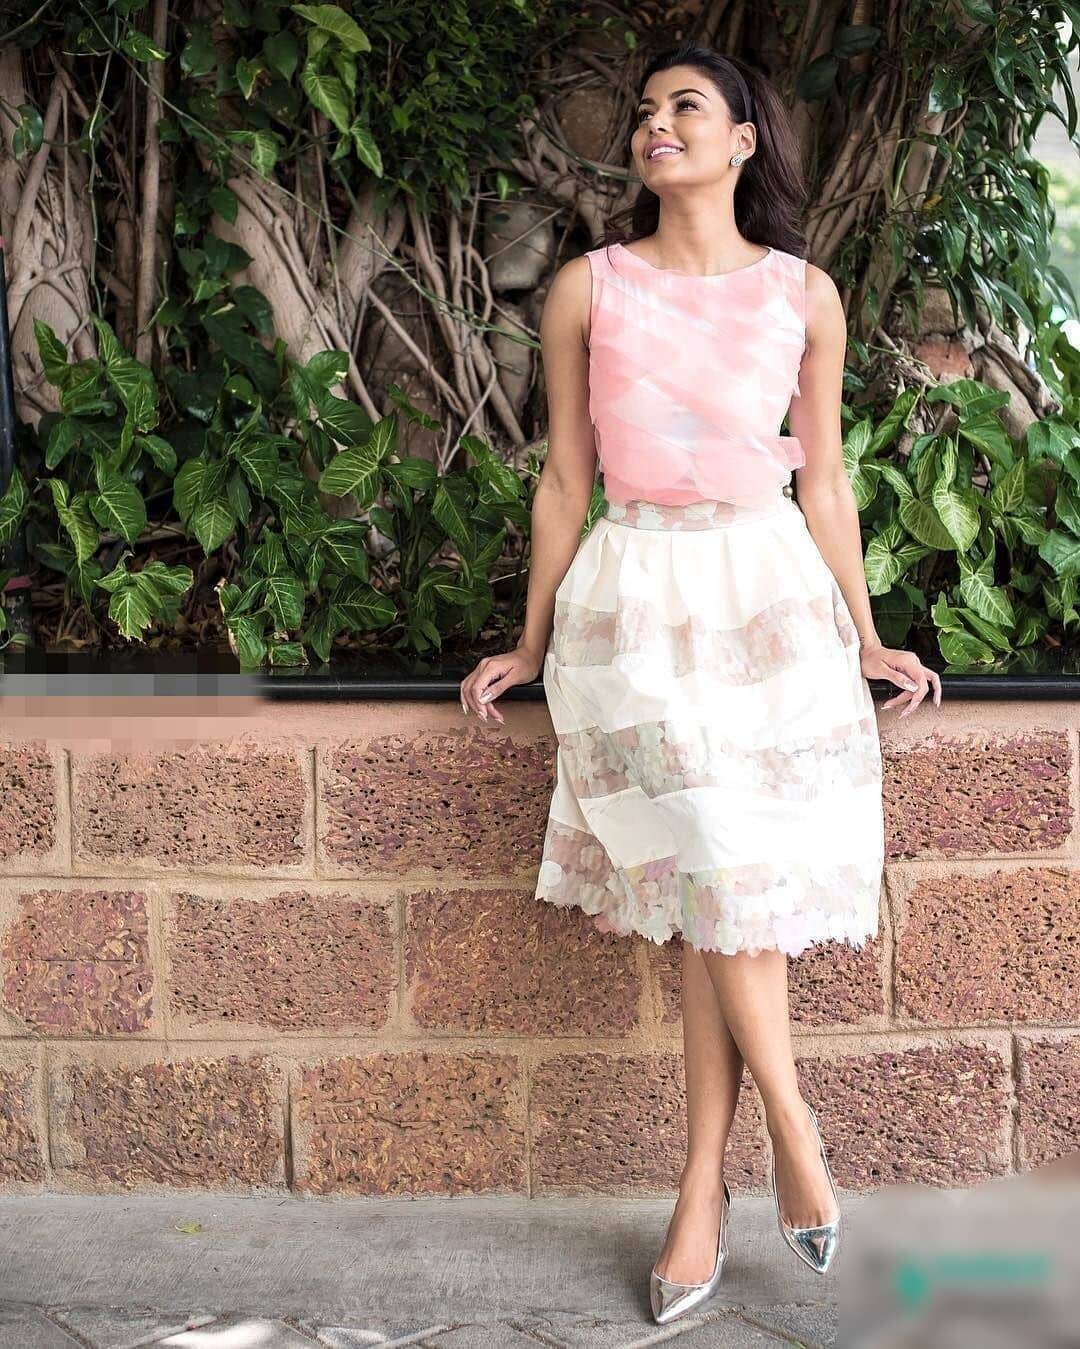 Anisha Ambrose Look Pretty In Sleeveless White & Pink Short Dress